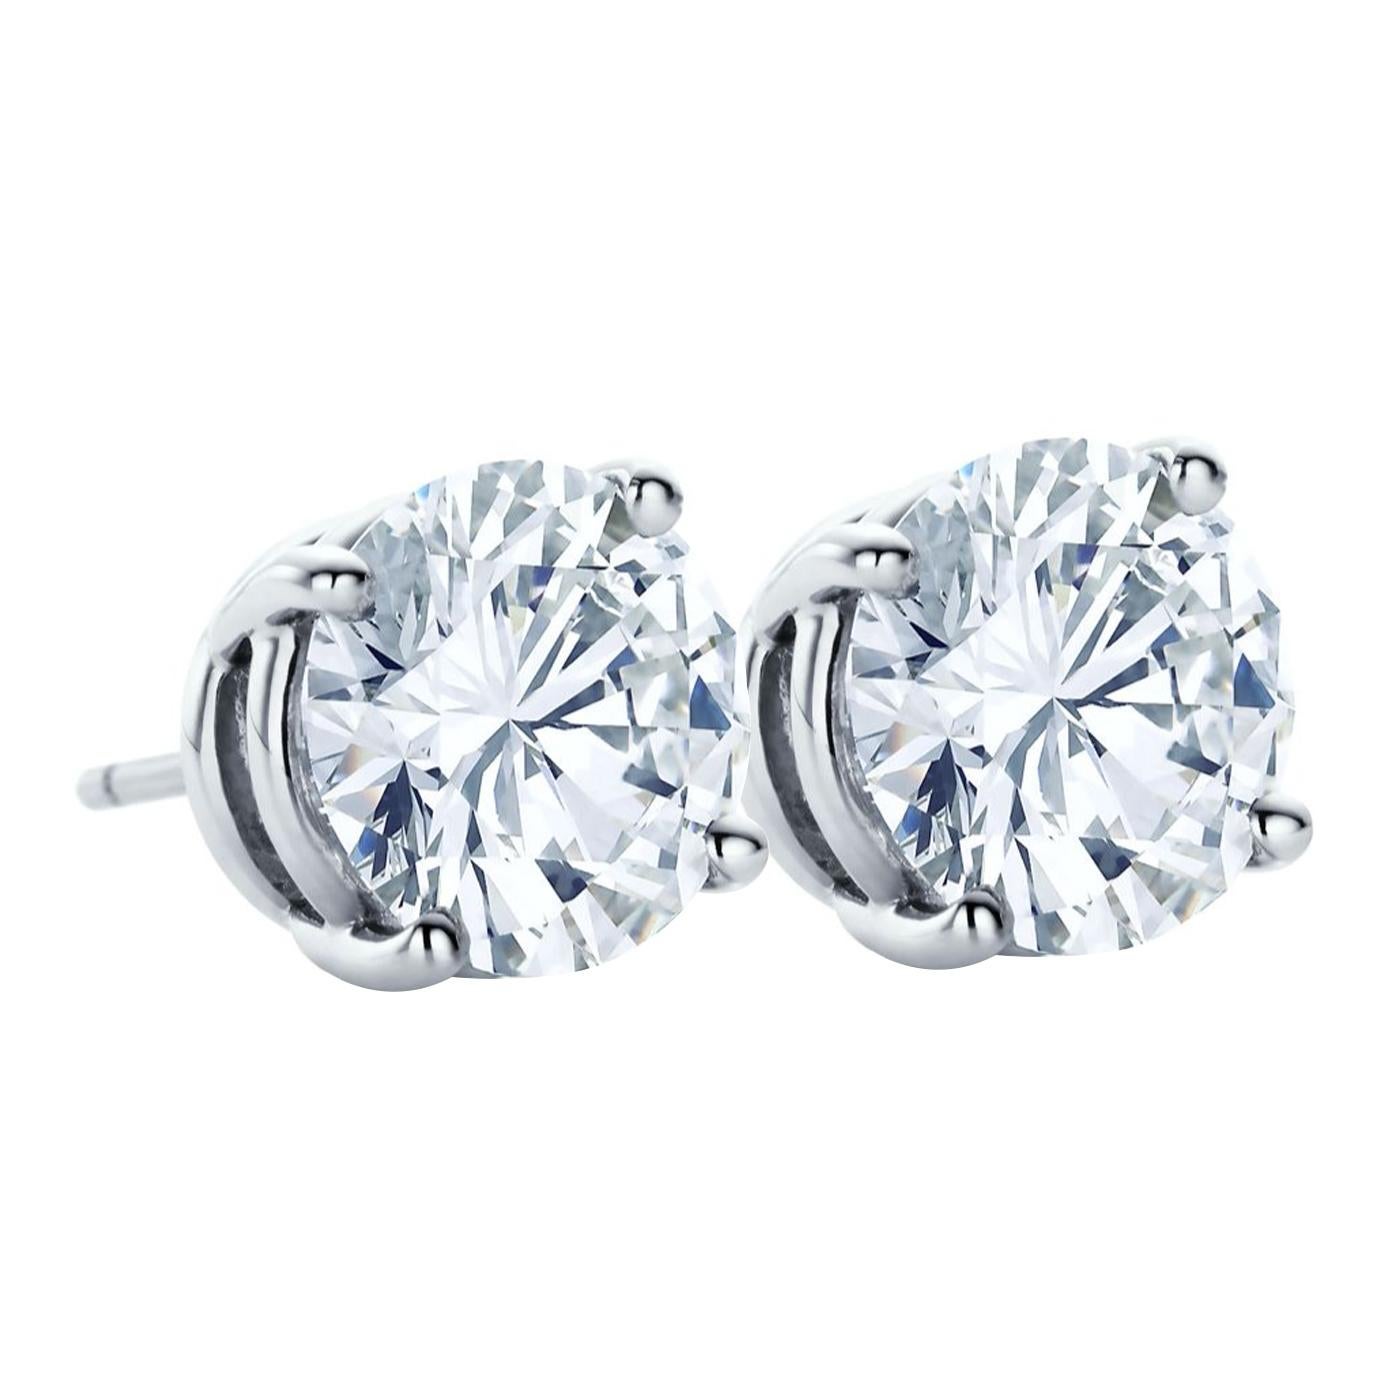 Modernist Tiffany & Co. 1.04ct Round Brilliant Diamond Stud Earrings E Color VS1 Clarity For Sale